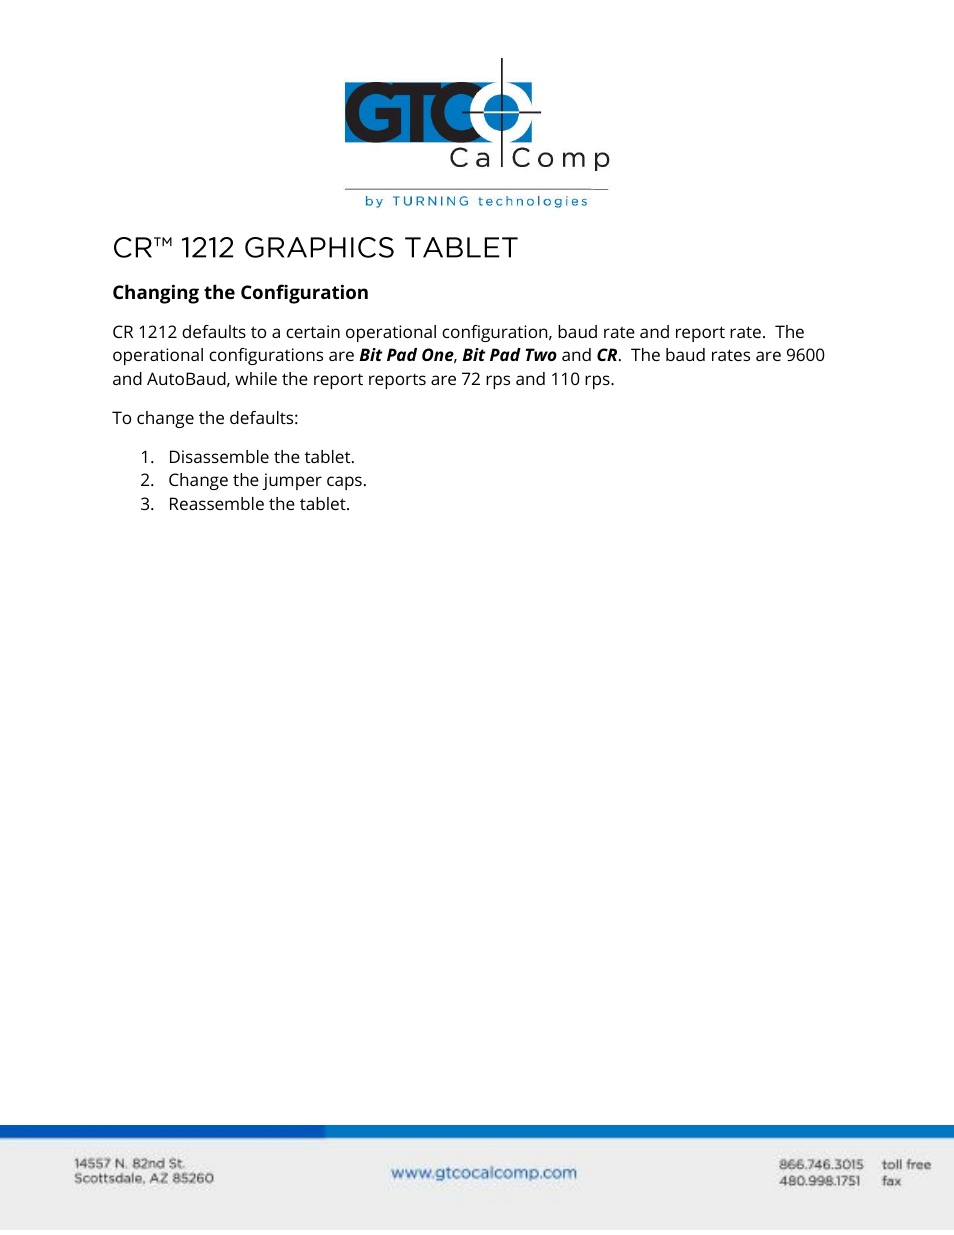 CR 1212 - Configuration